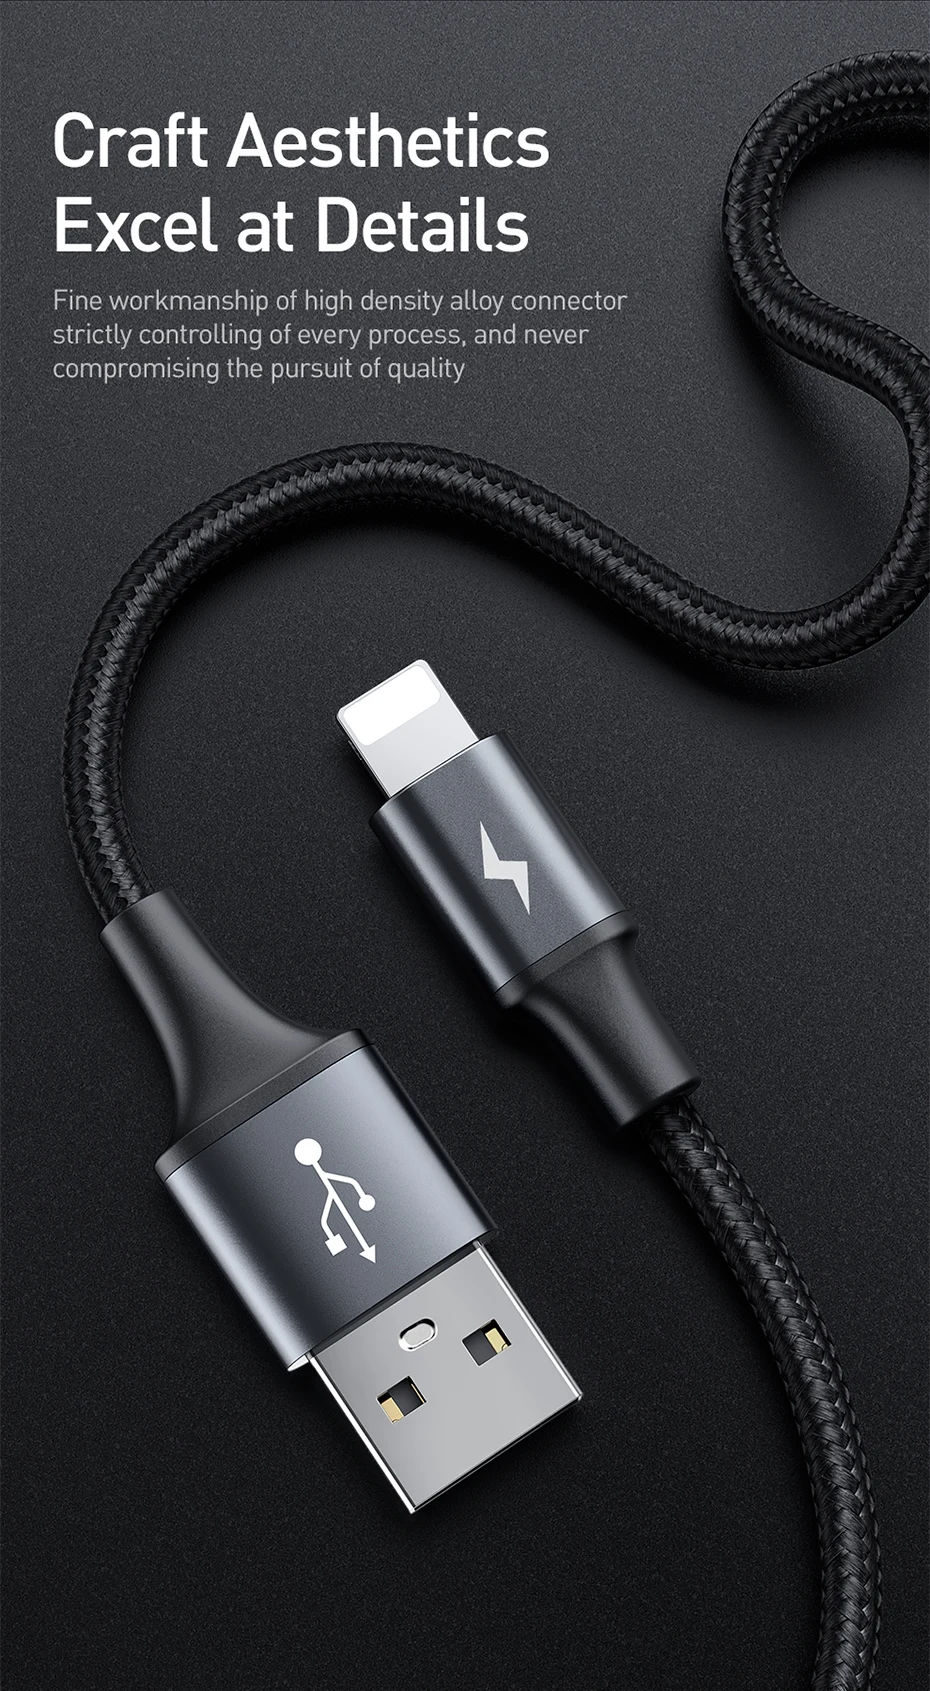 Baseus USB кабель для iPhone двойной USB зарядное устройство Автомобильное заднее сиденье usb зарядный кабель провод шнур адаптер для iPhone Xs Max XR X 8 7 Plus